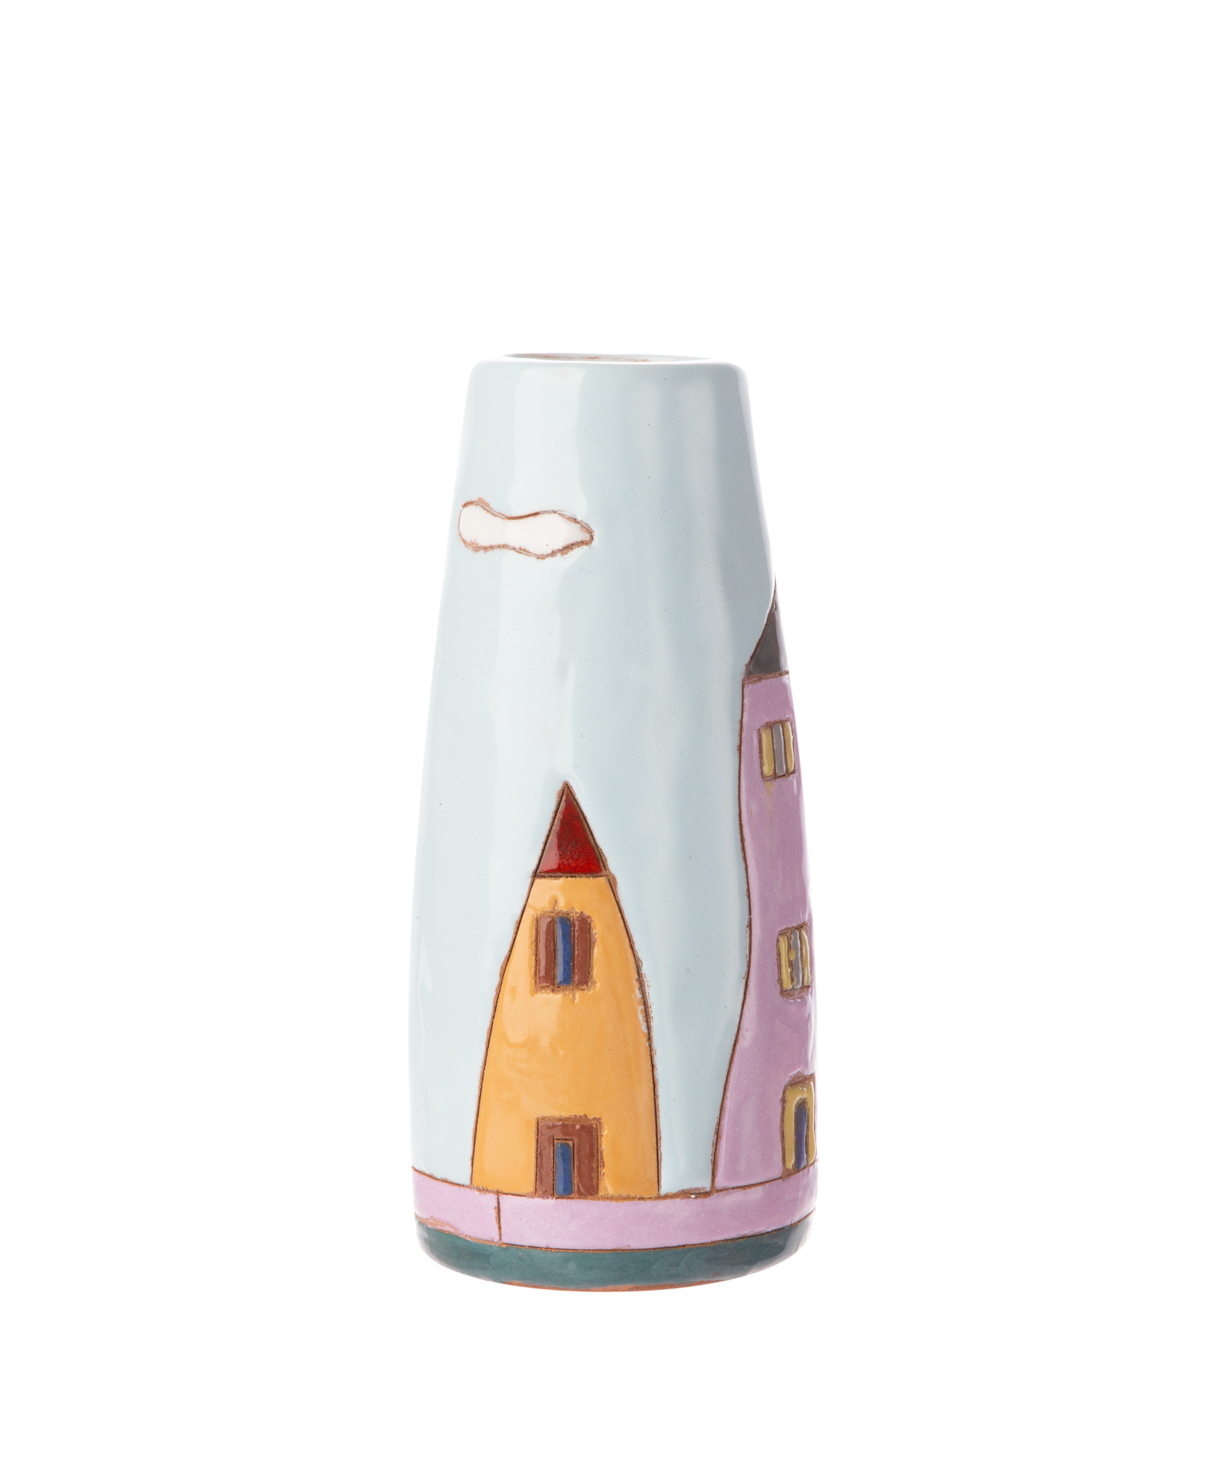 Vase `Nuard Ceramics` for flowers, City, small